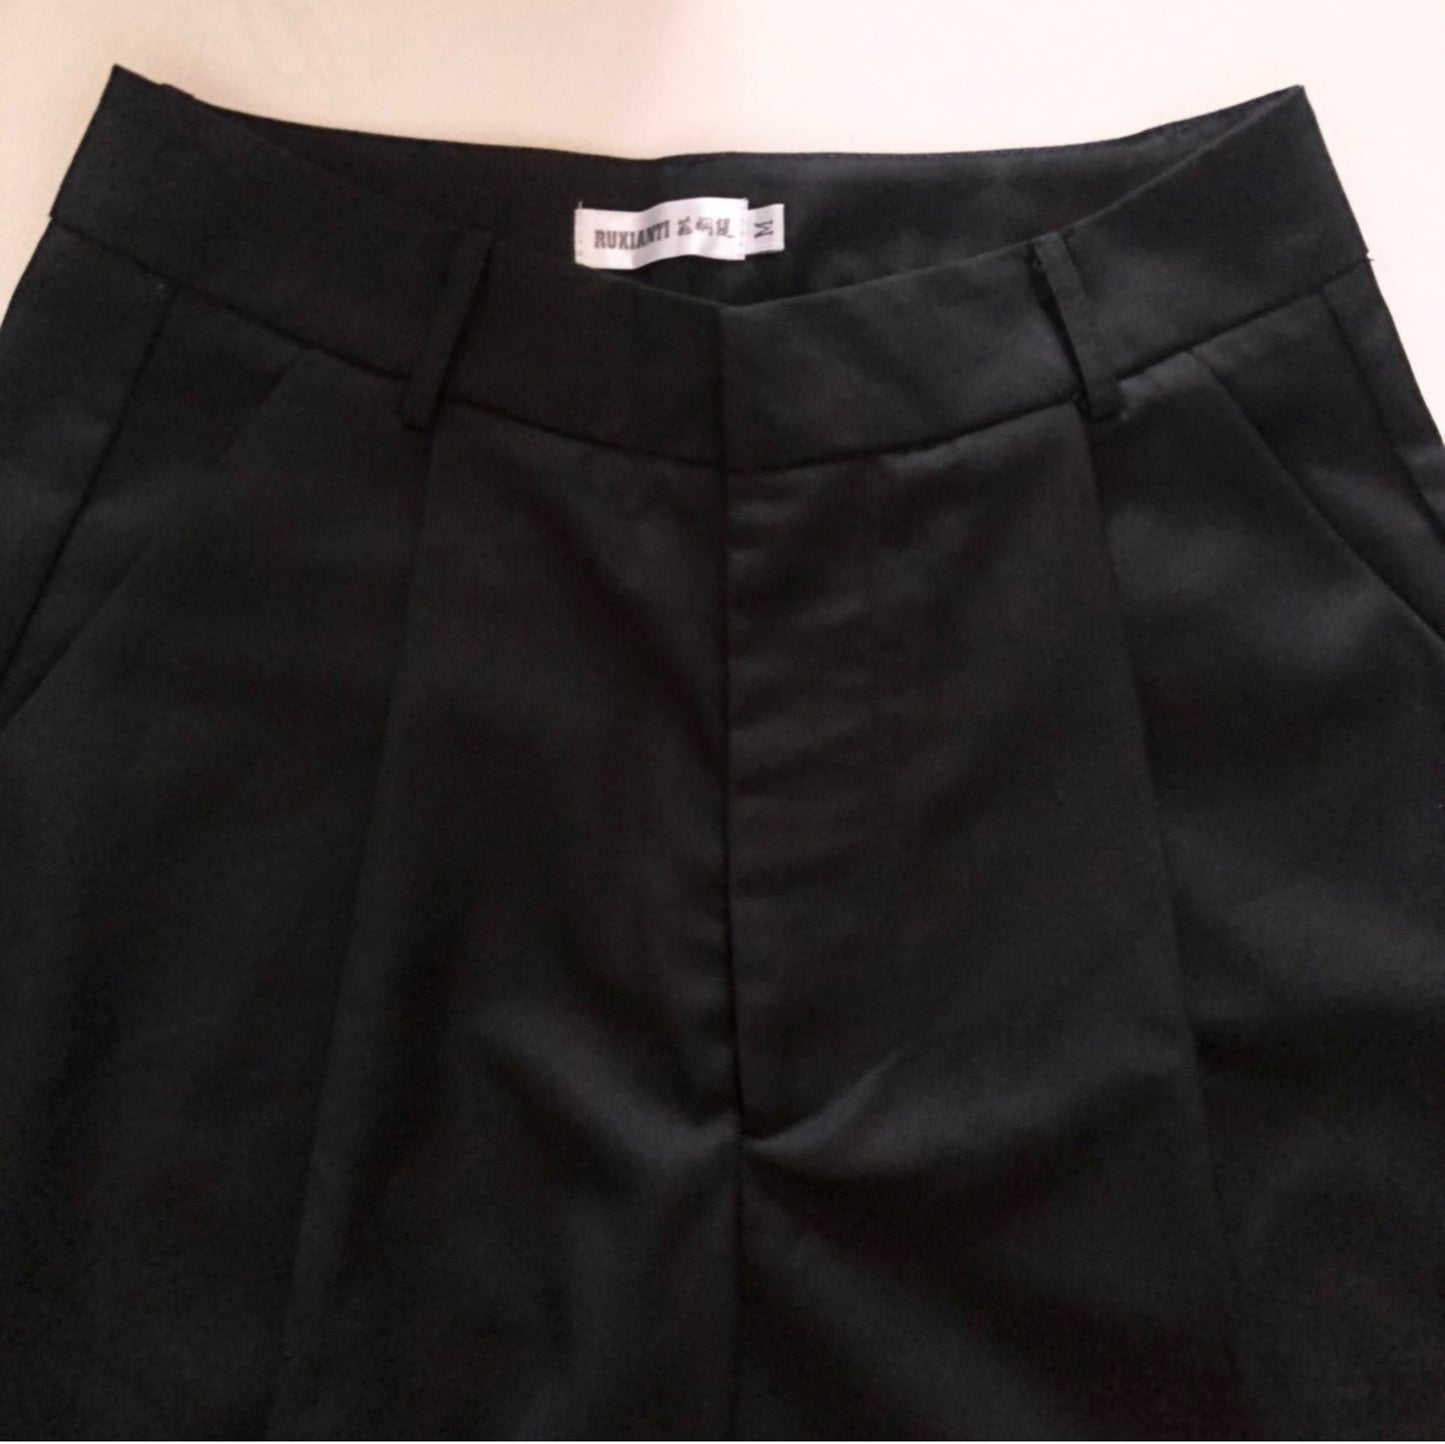 Basic Bermuda pants worn by Instagrammer ma.ko 5743